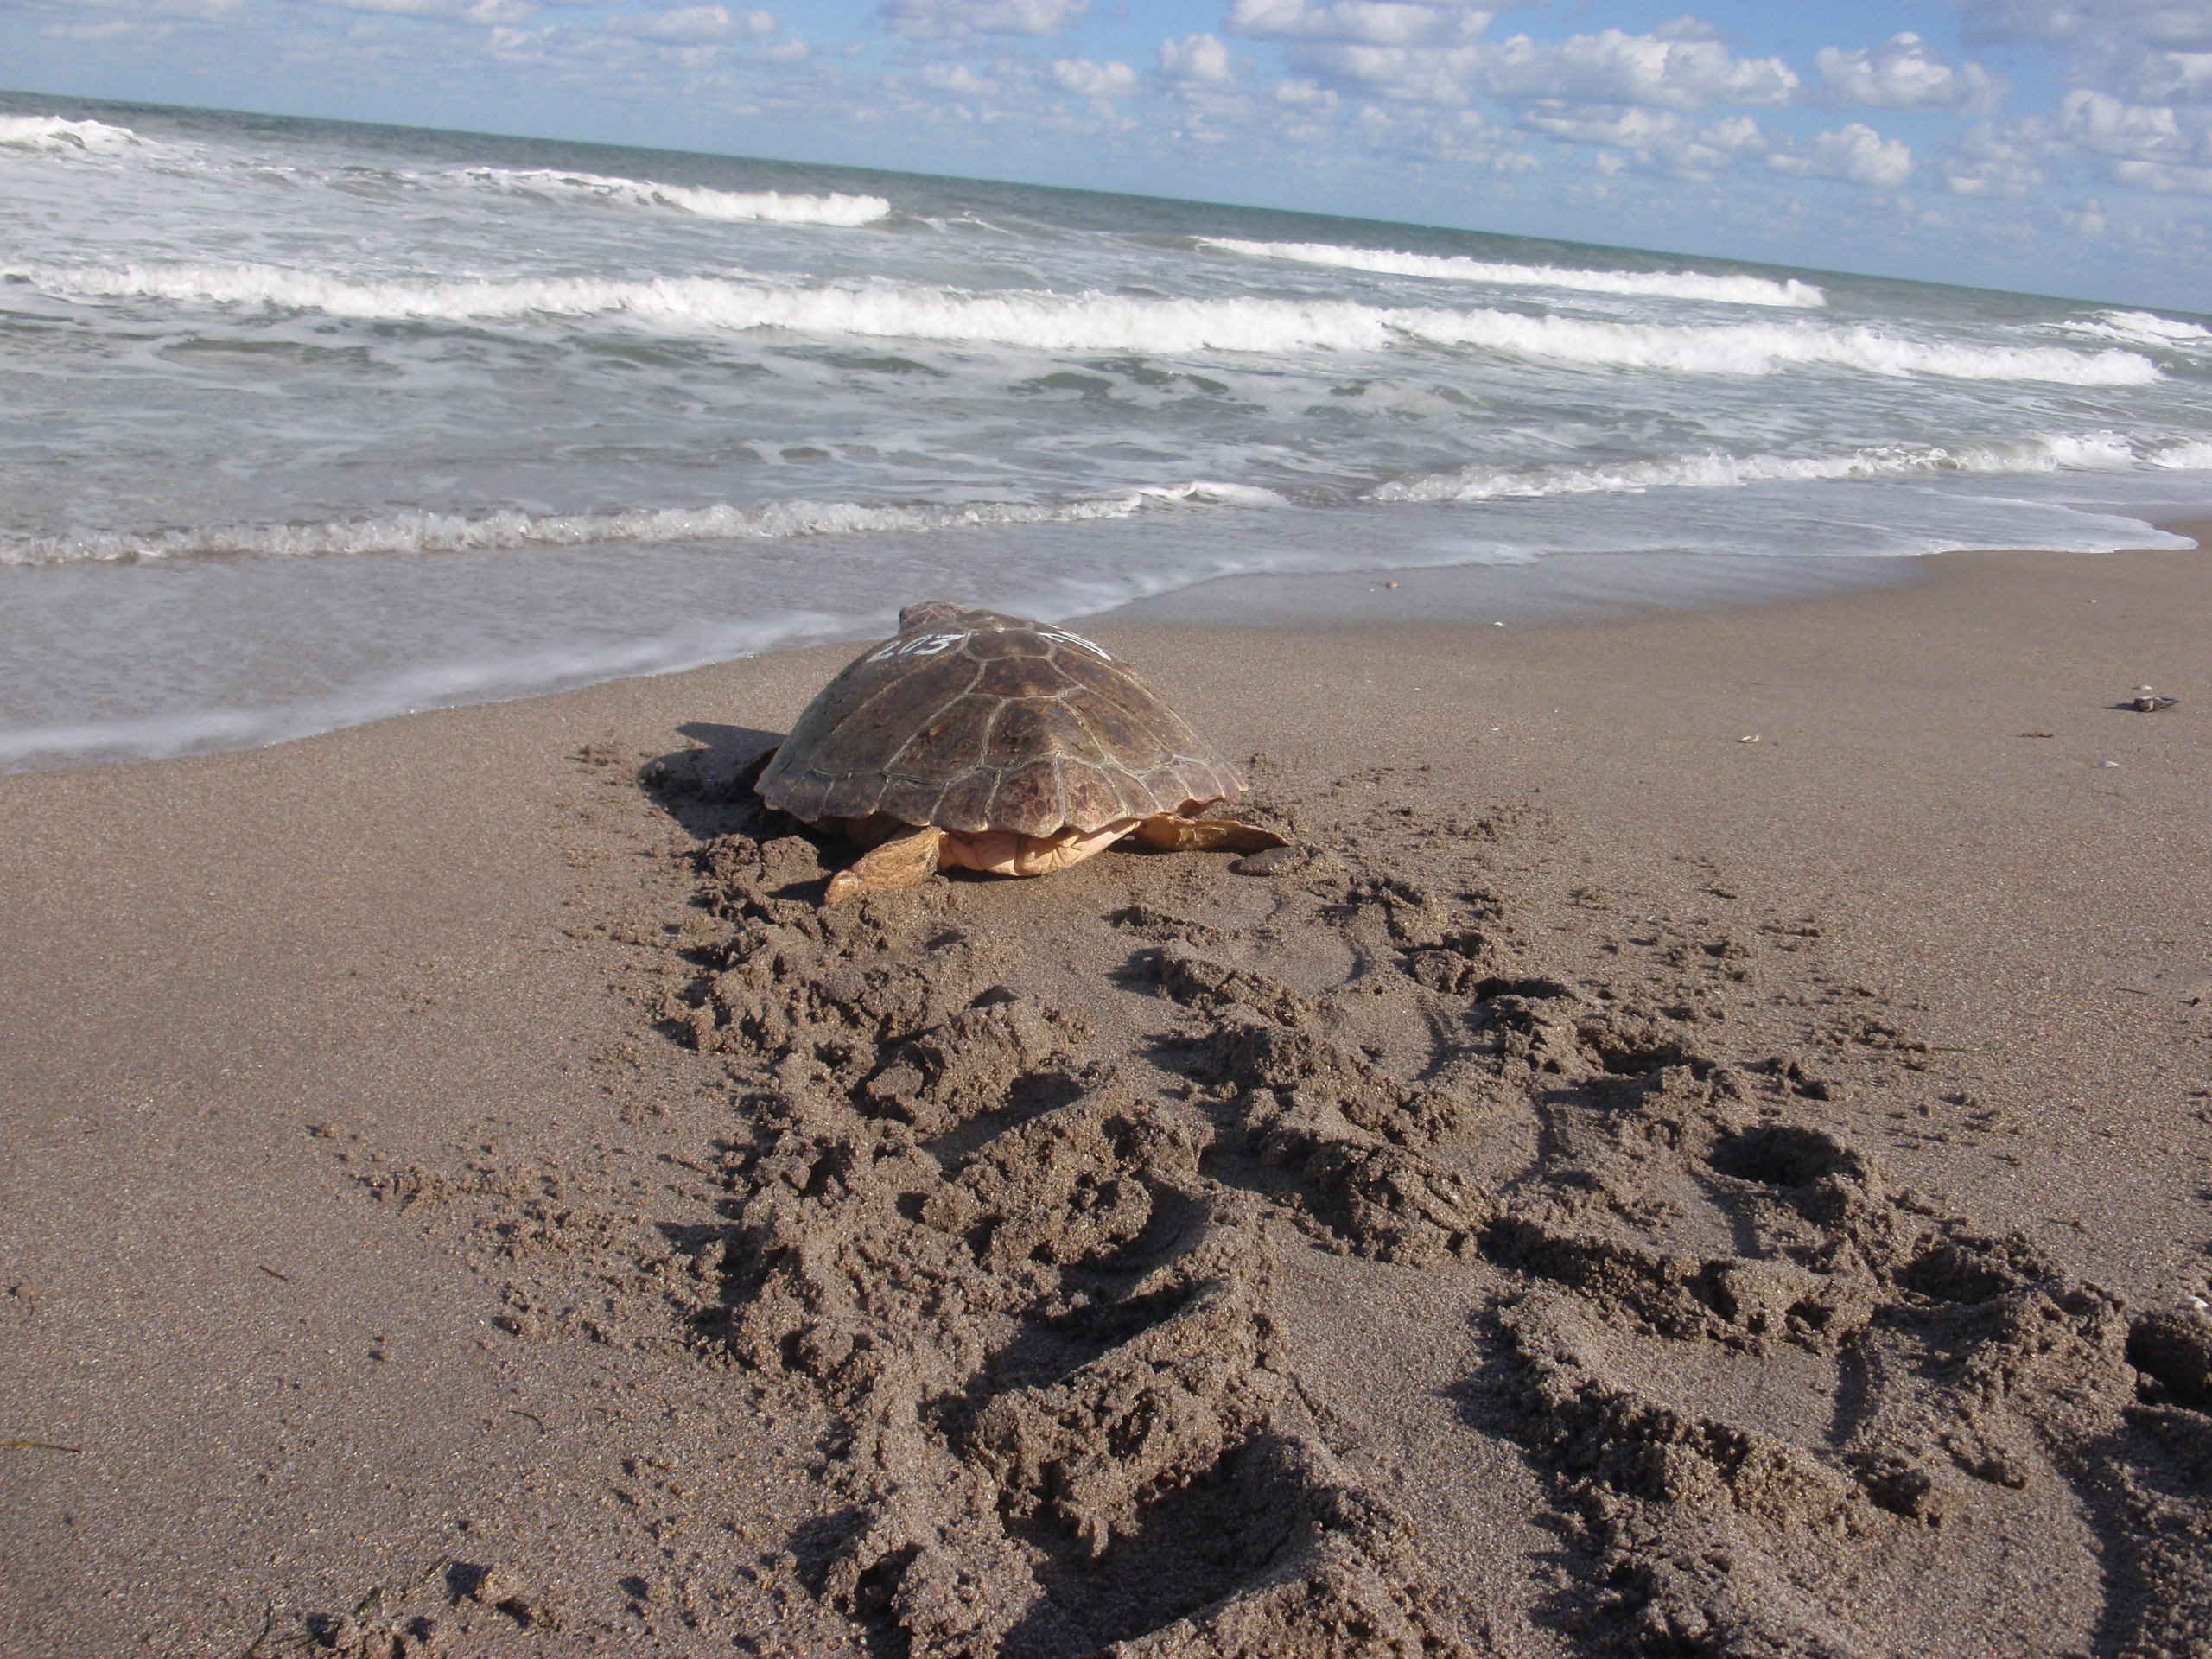 Loggerhead sea turtle returning to the ocean. PC: Tonya Long